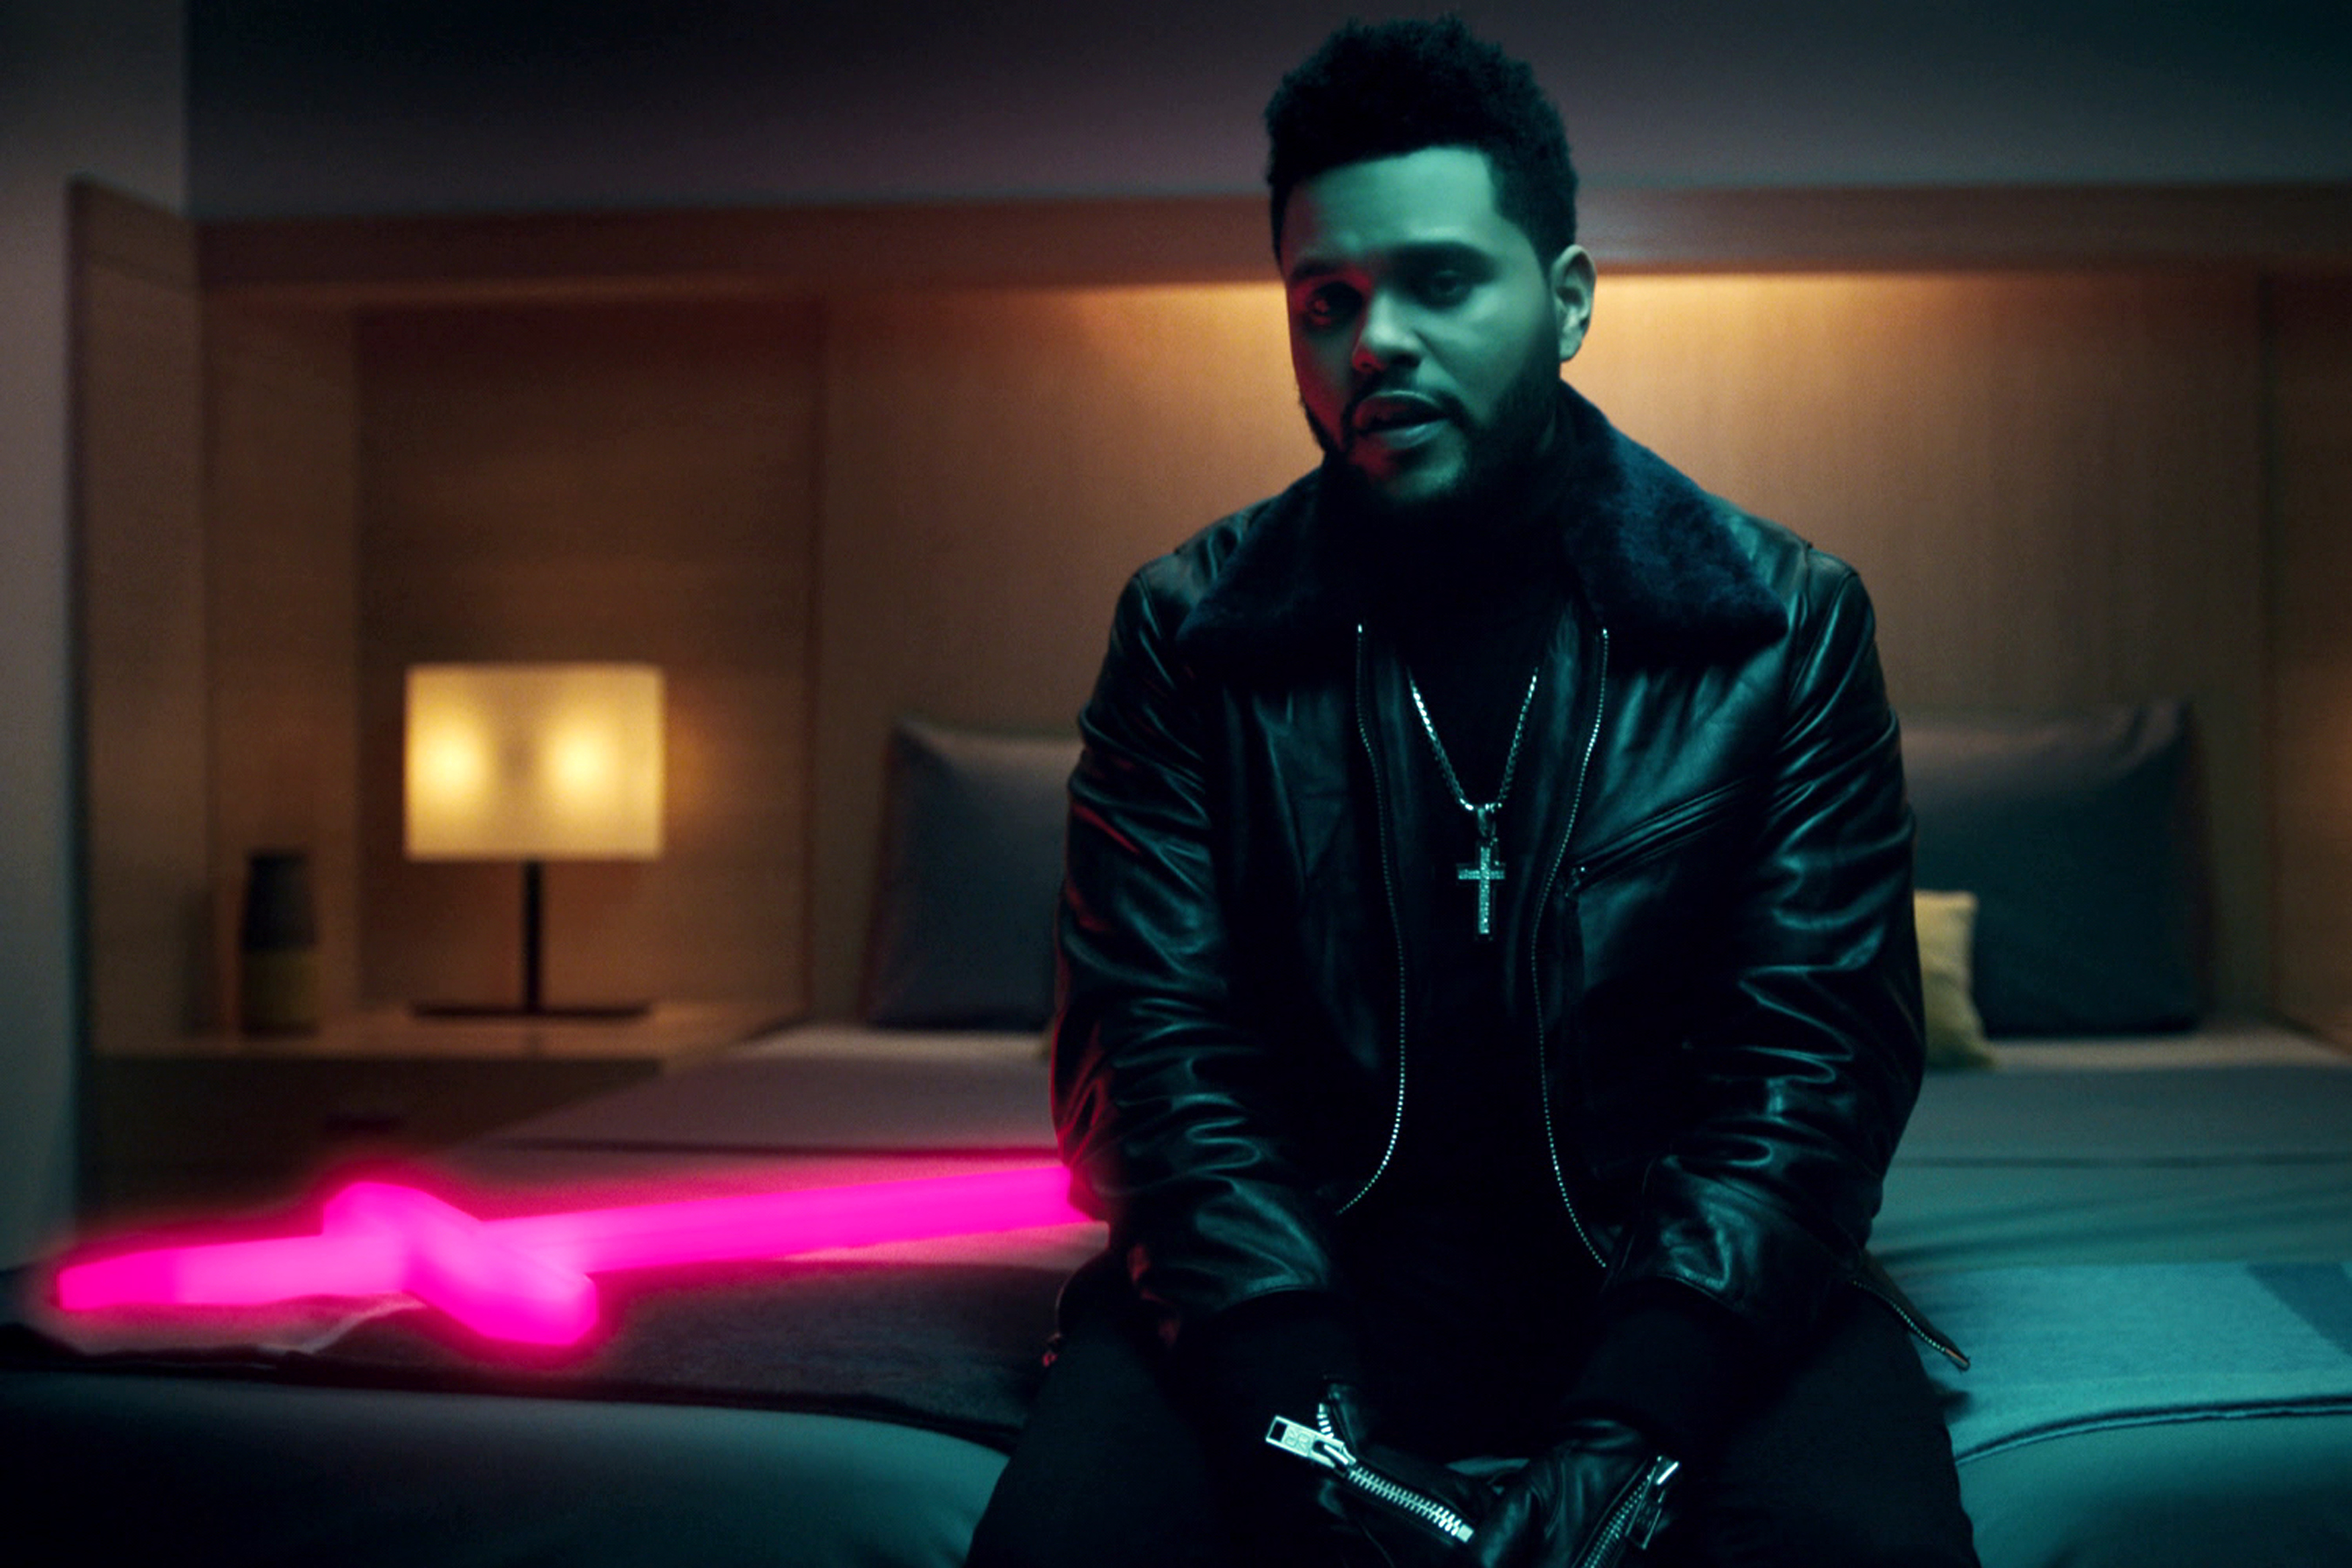 Музыка петь клип. The Weeknd. Уикенд старбой. Starboy обложка. The weekend 2015.